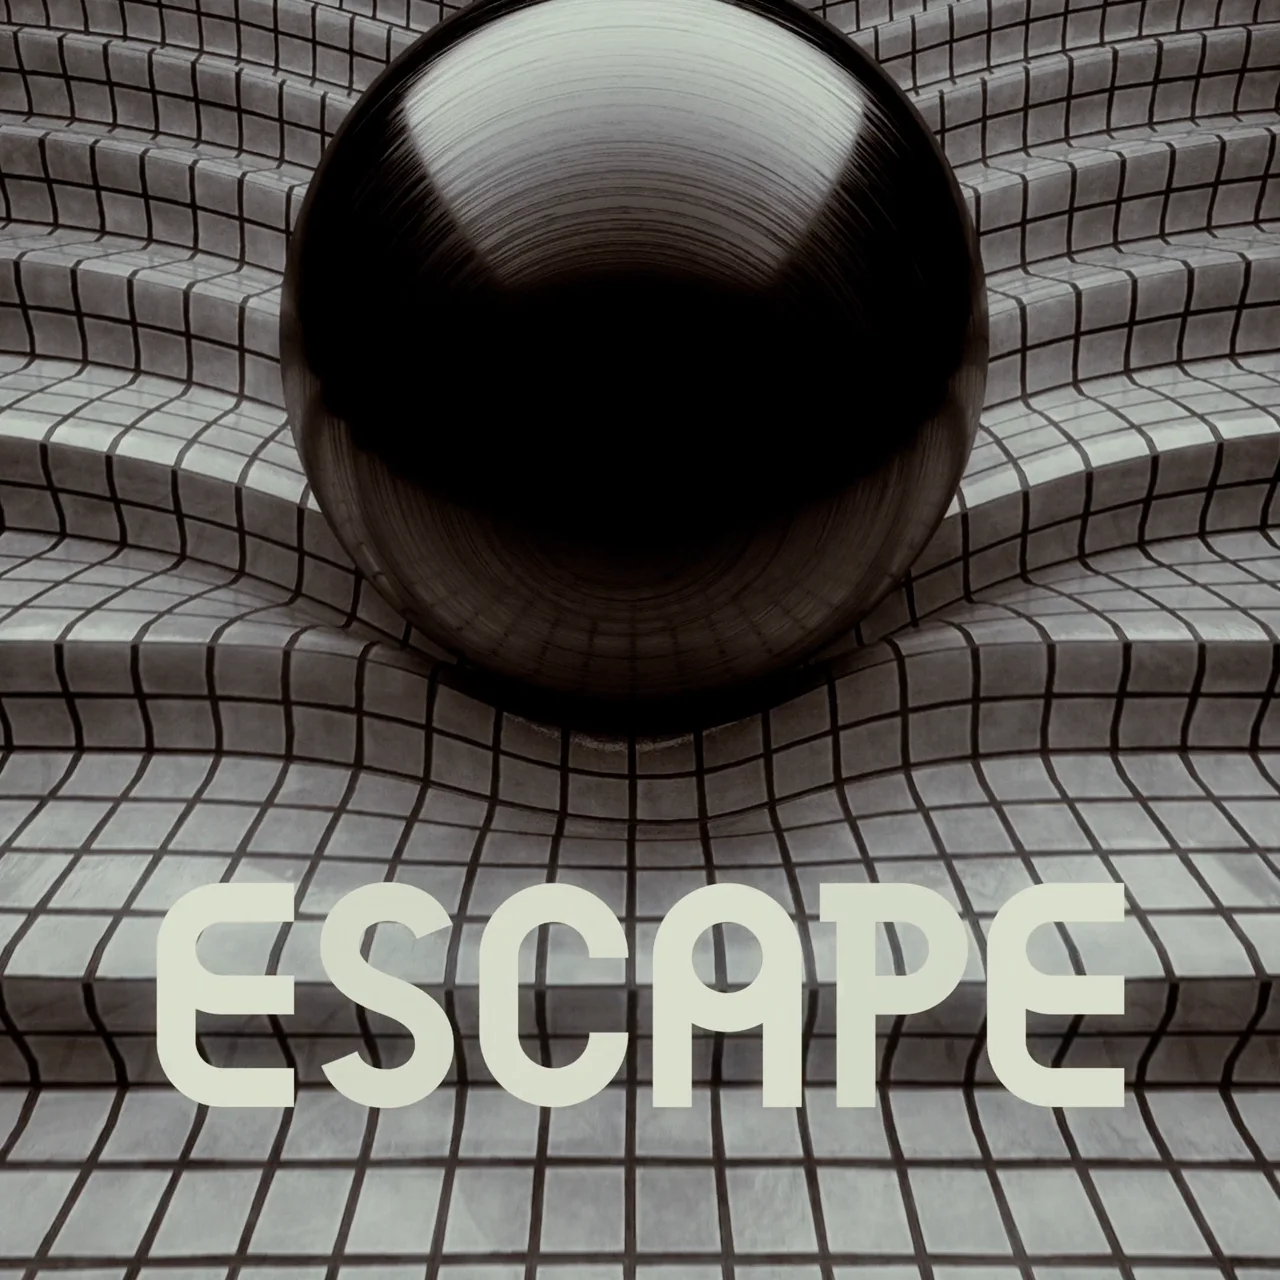 Escape (a word, a week)